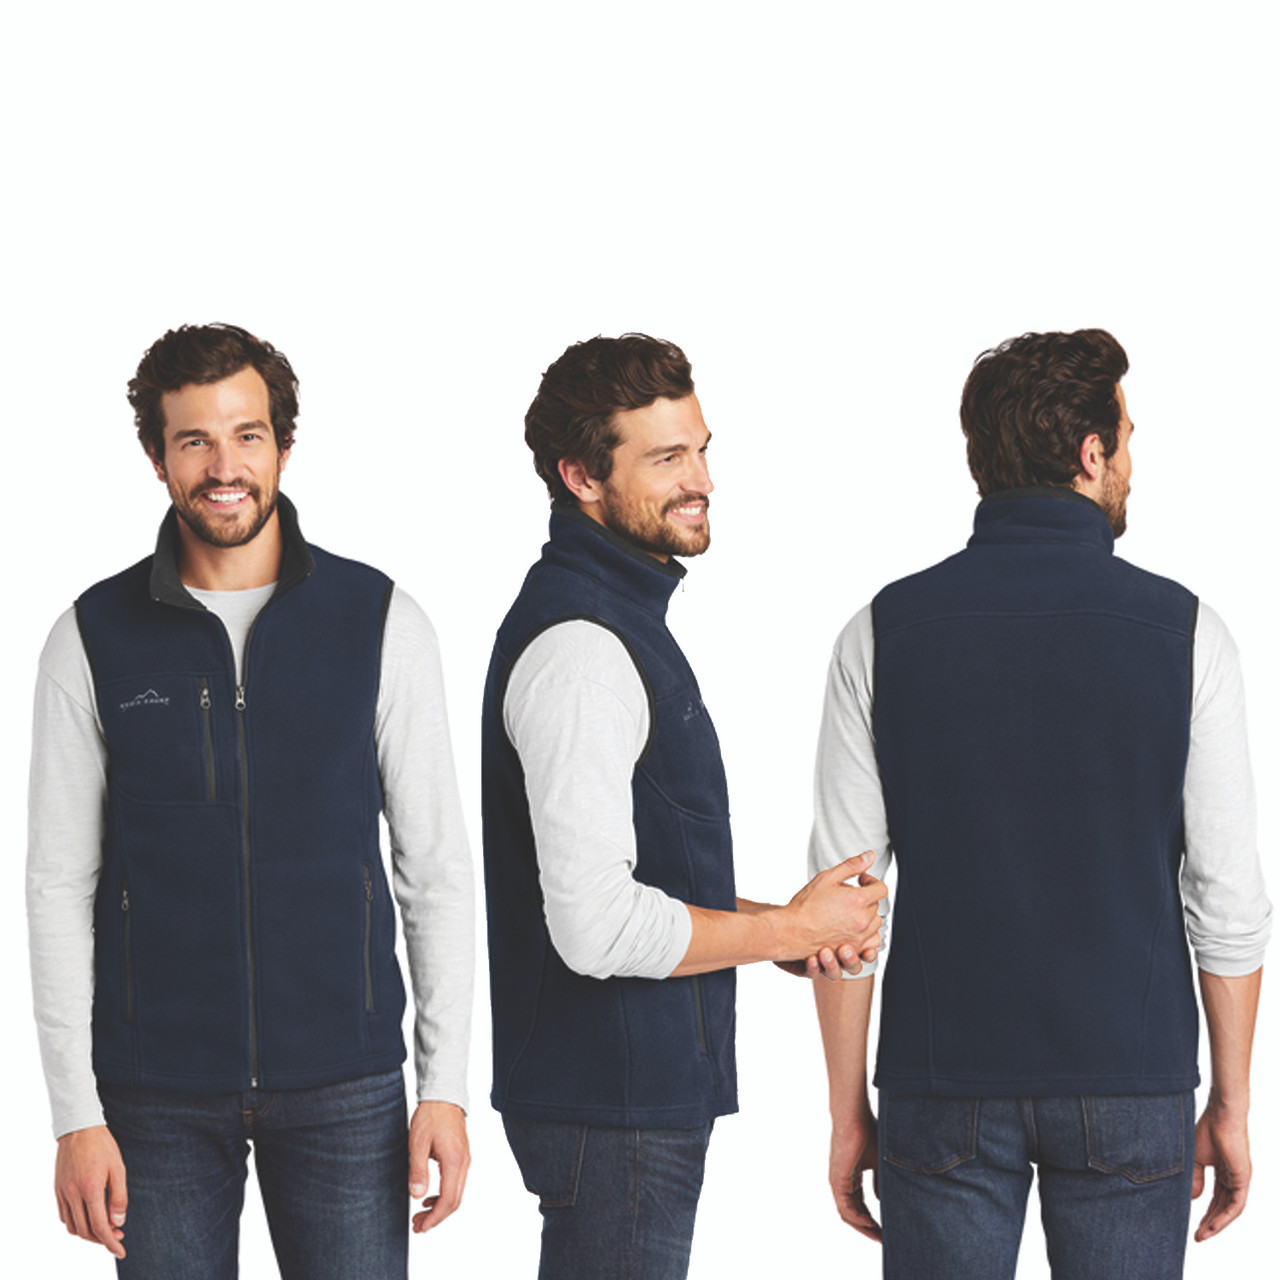 Eddie Bauer® Fleece Vest - Men's** (Restrictions Apply - see